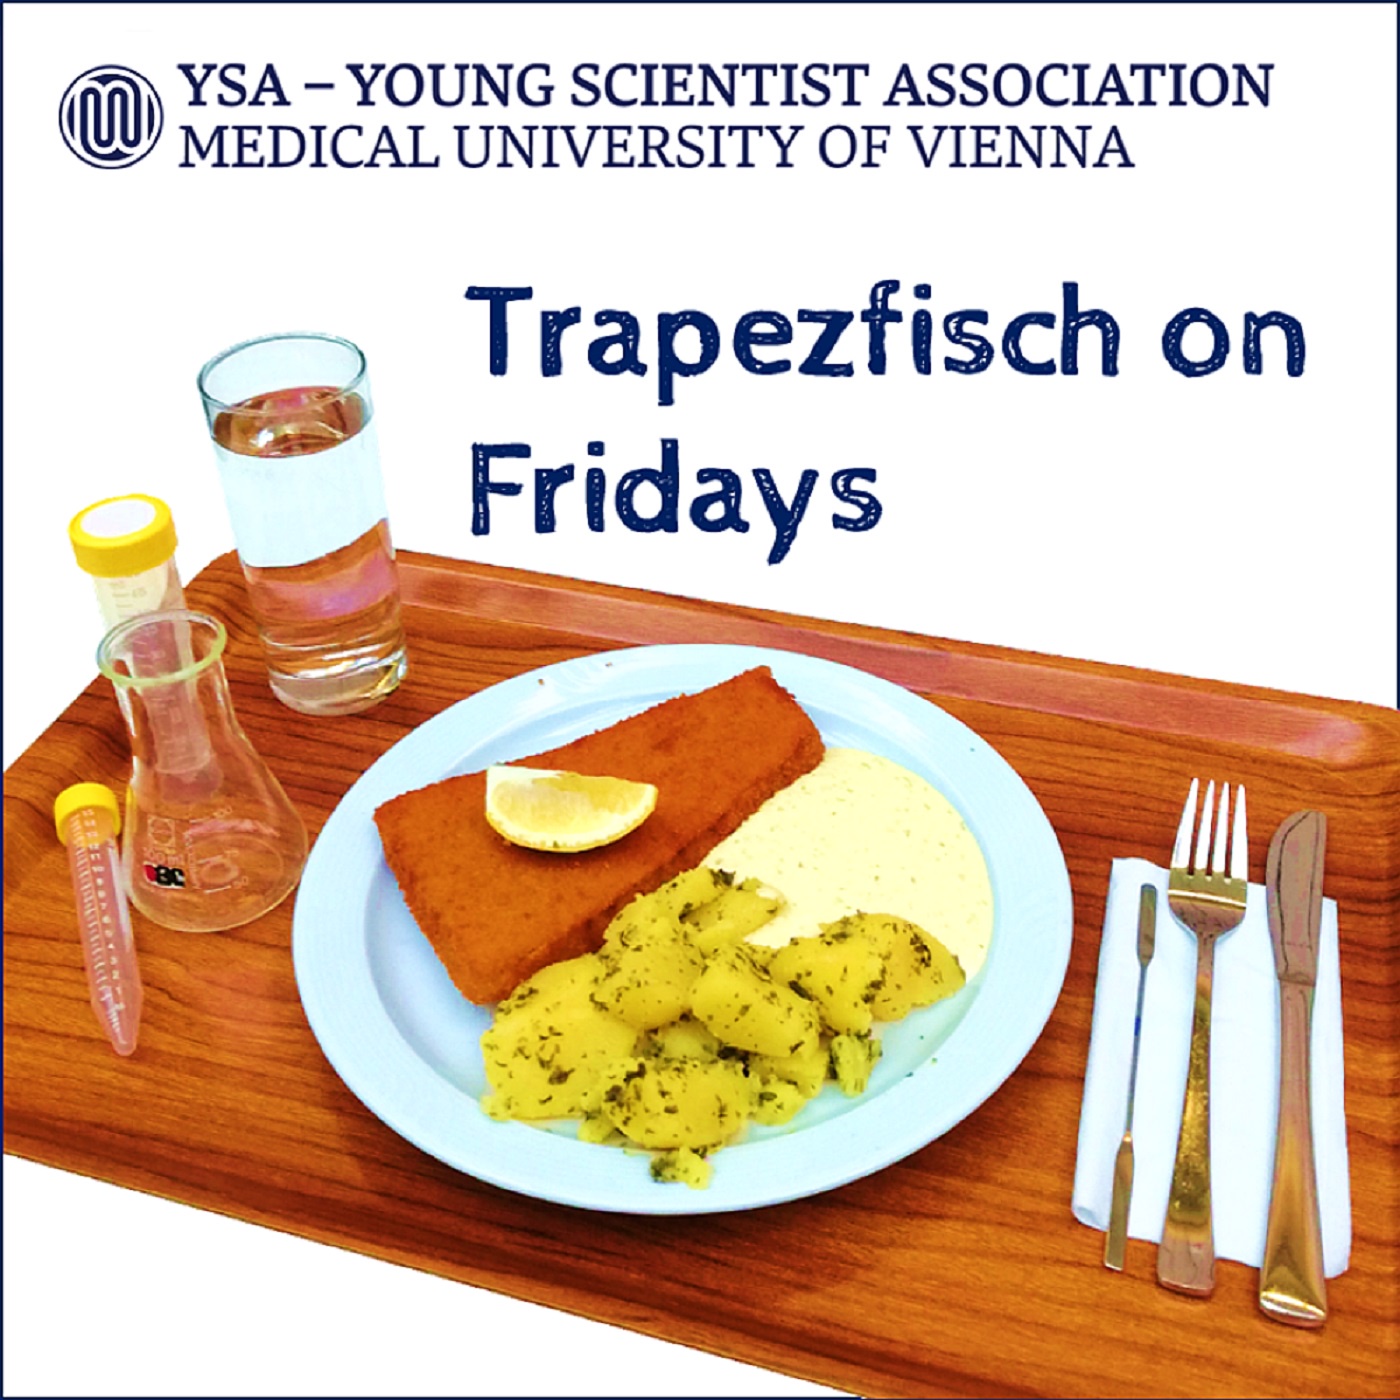 Trapezfisch on Fridays